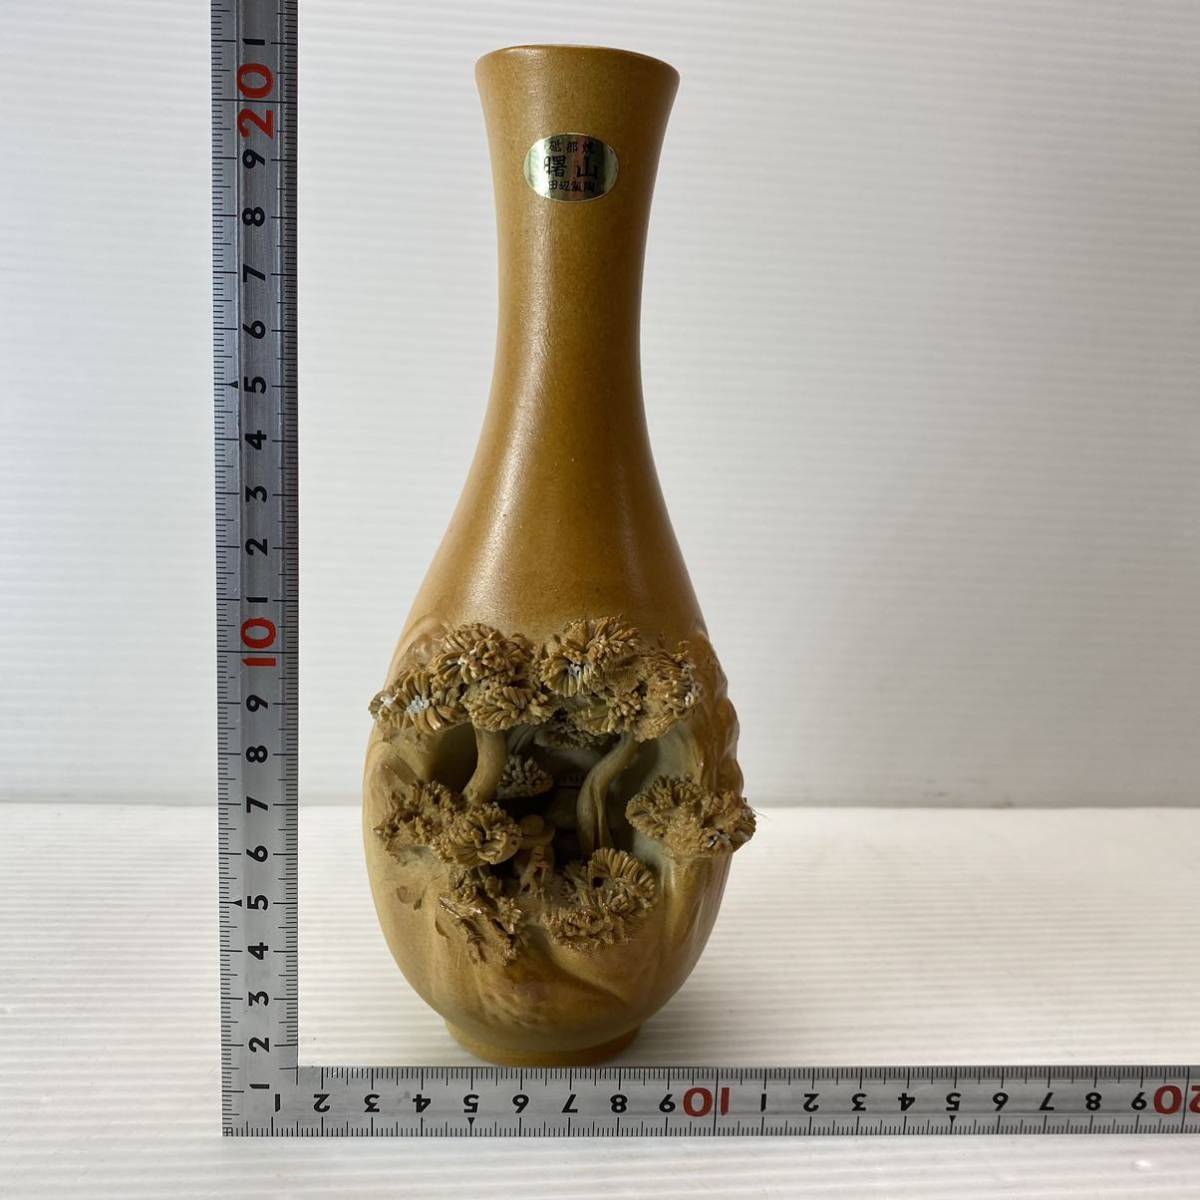  Tobe .. mountain vase flower vase flower go in one wheel .. small . skill ornament interior ornament present condition goods 